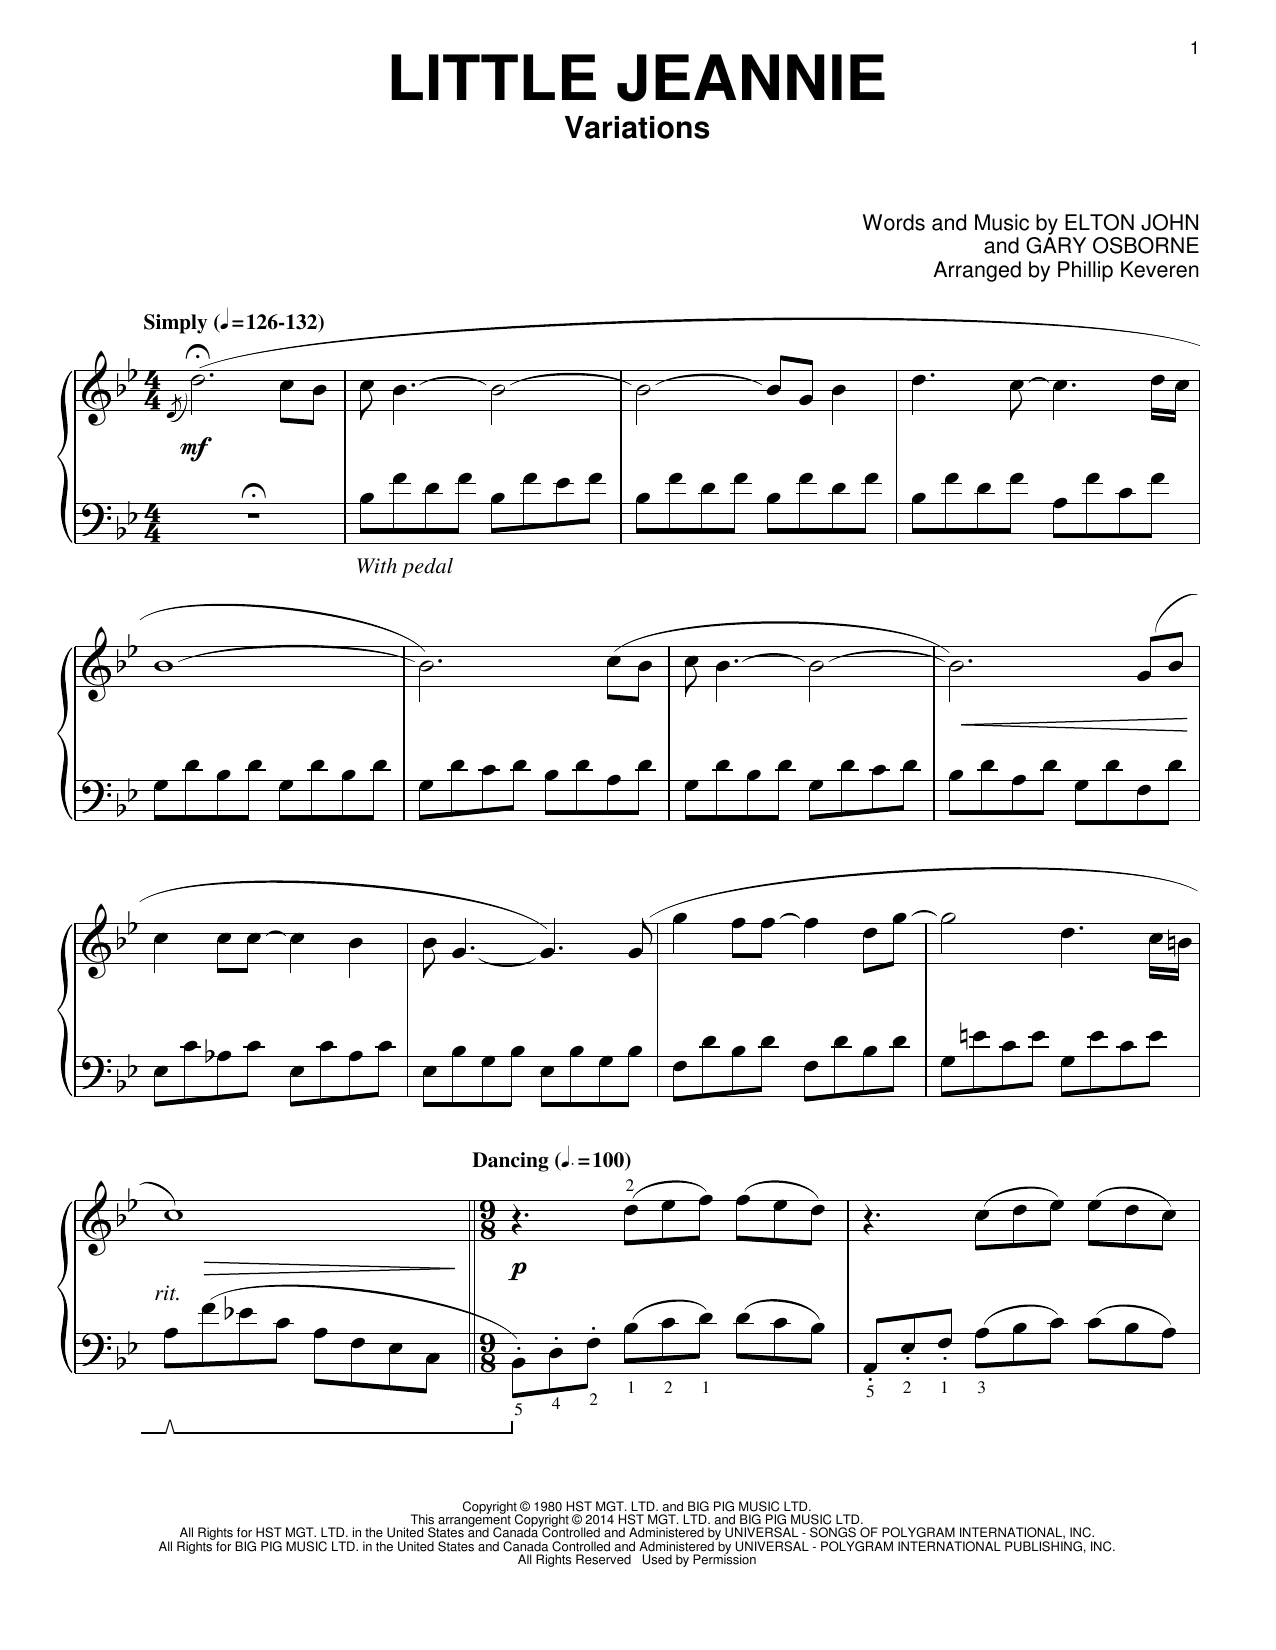 Elton John Little Jeannie [Classical version] (arr. Phillip Keveren) Sheet Music Notes & Chords for Piano - Download or Print PDF